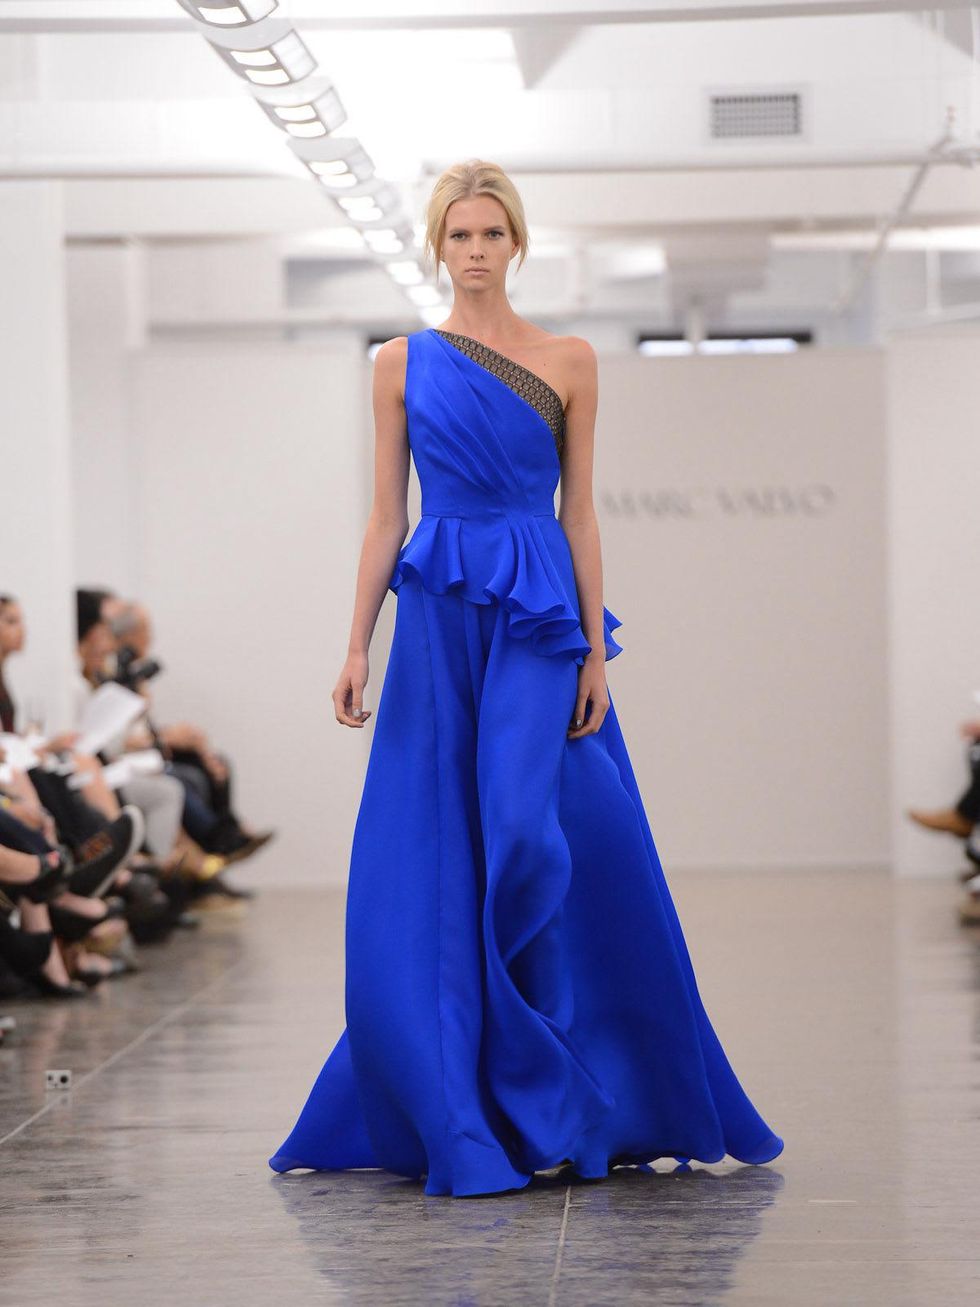 Clifford, Fashion Week spring 2013, September 2012, Carmen Marc Valvo, blue gown